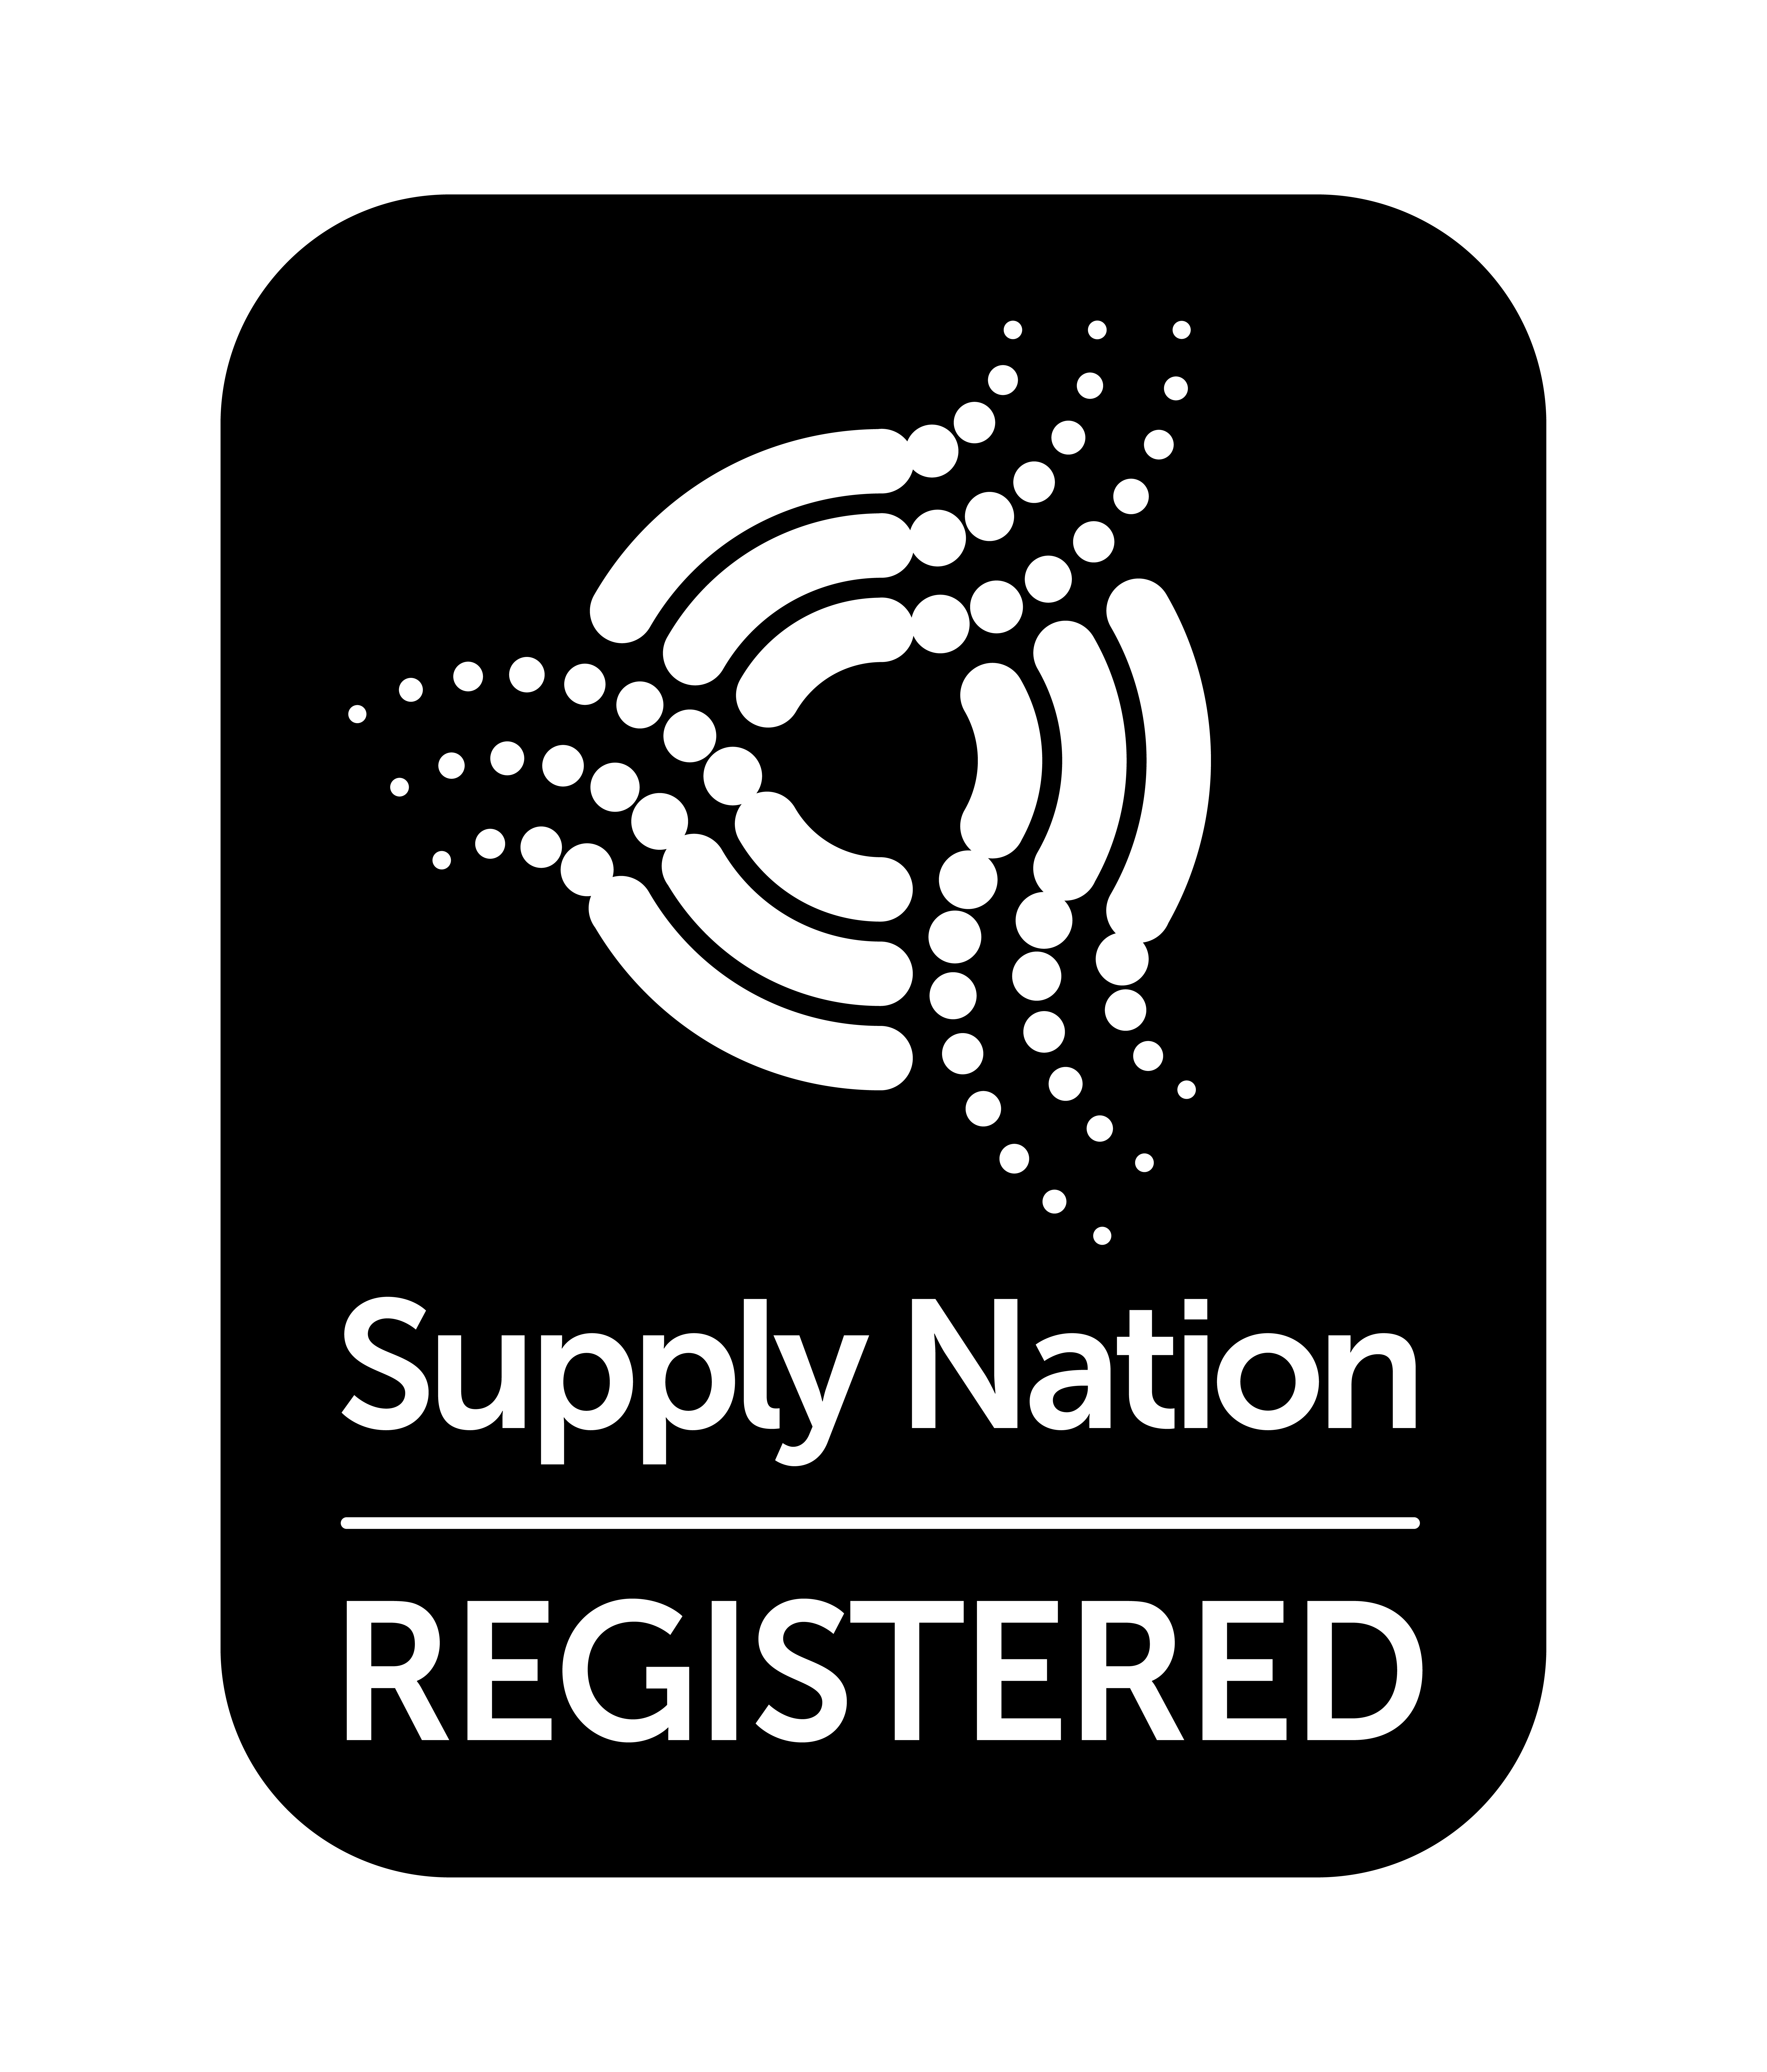 Supply Nation Registered logo black